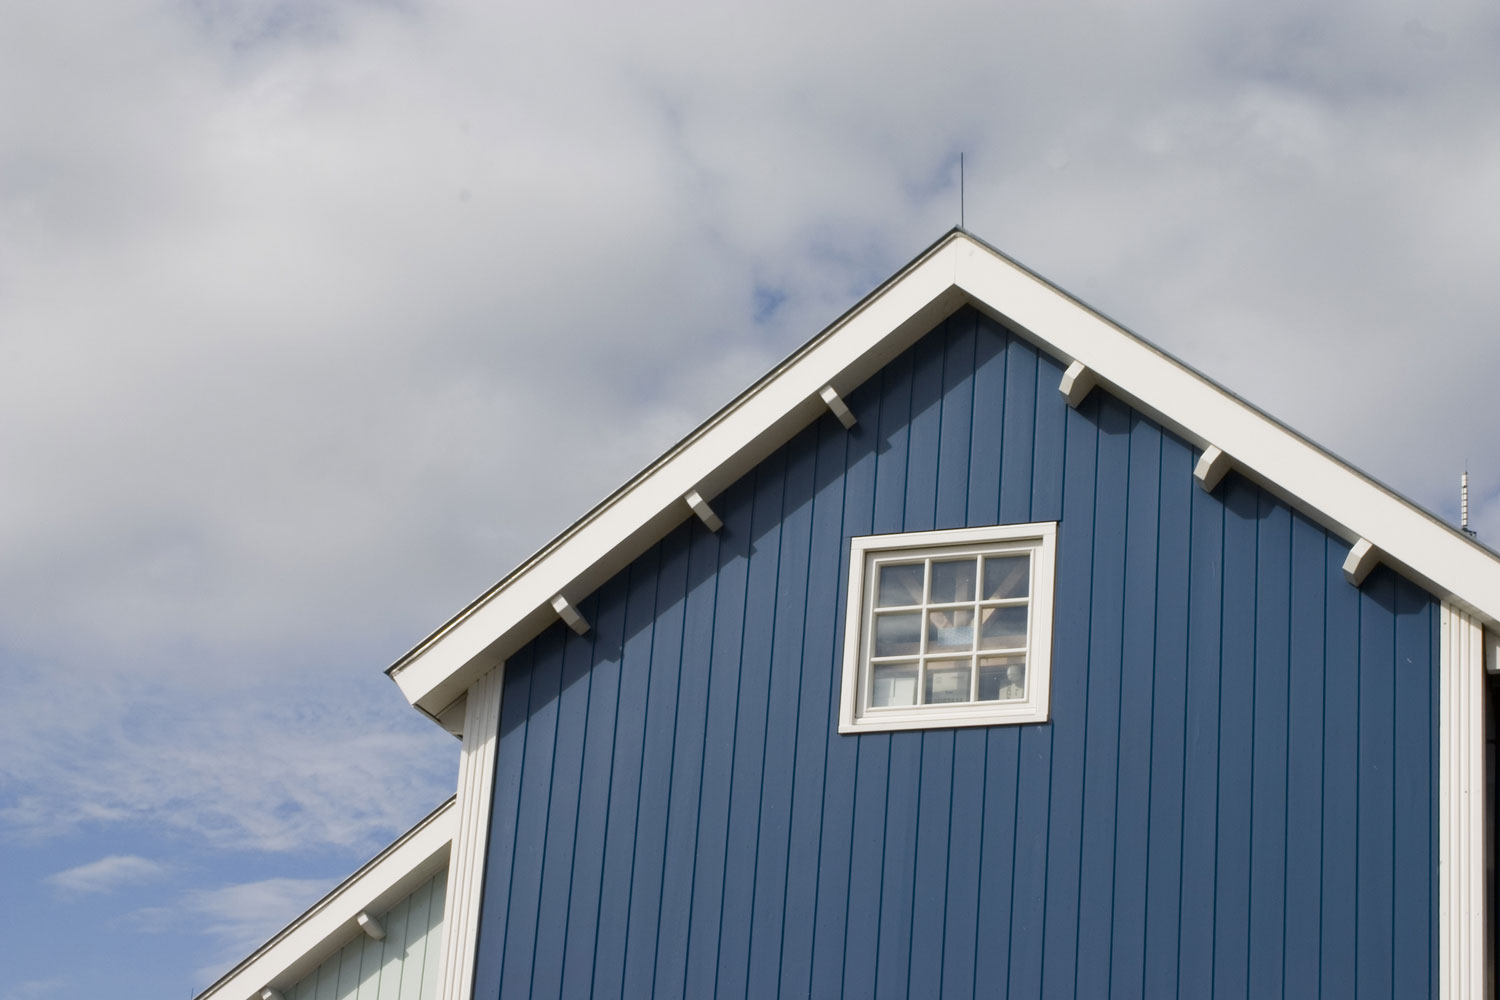 A blue siding farm house with white trims